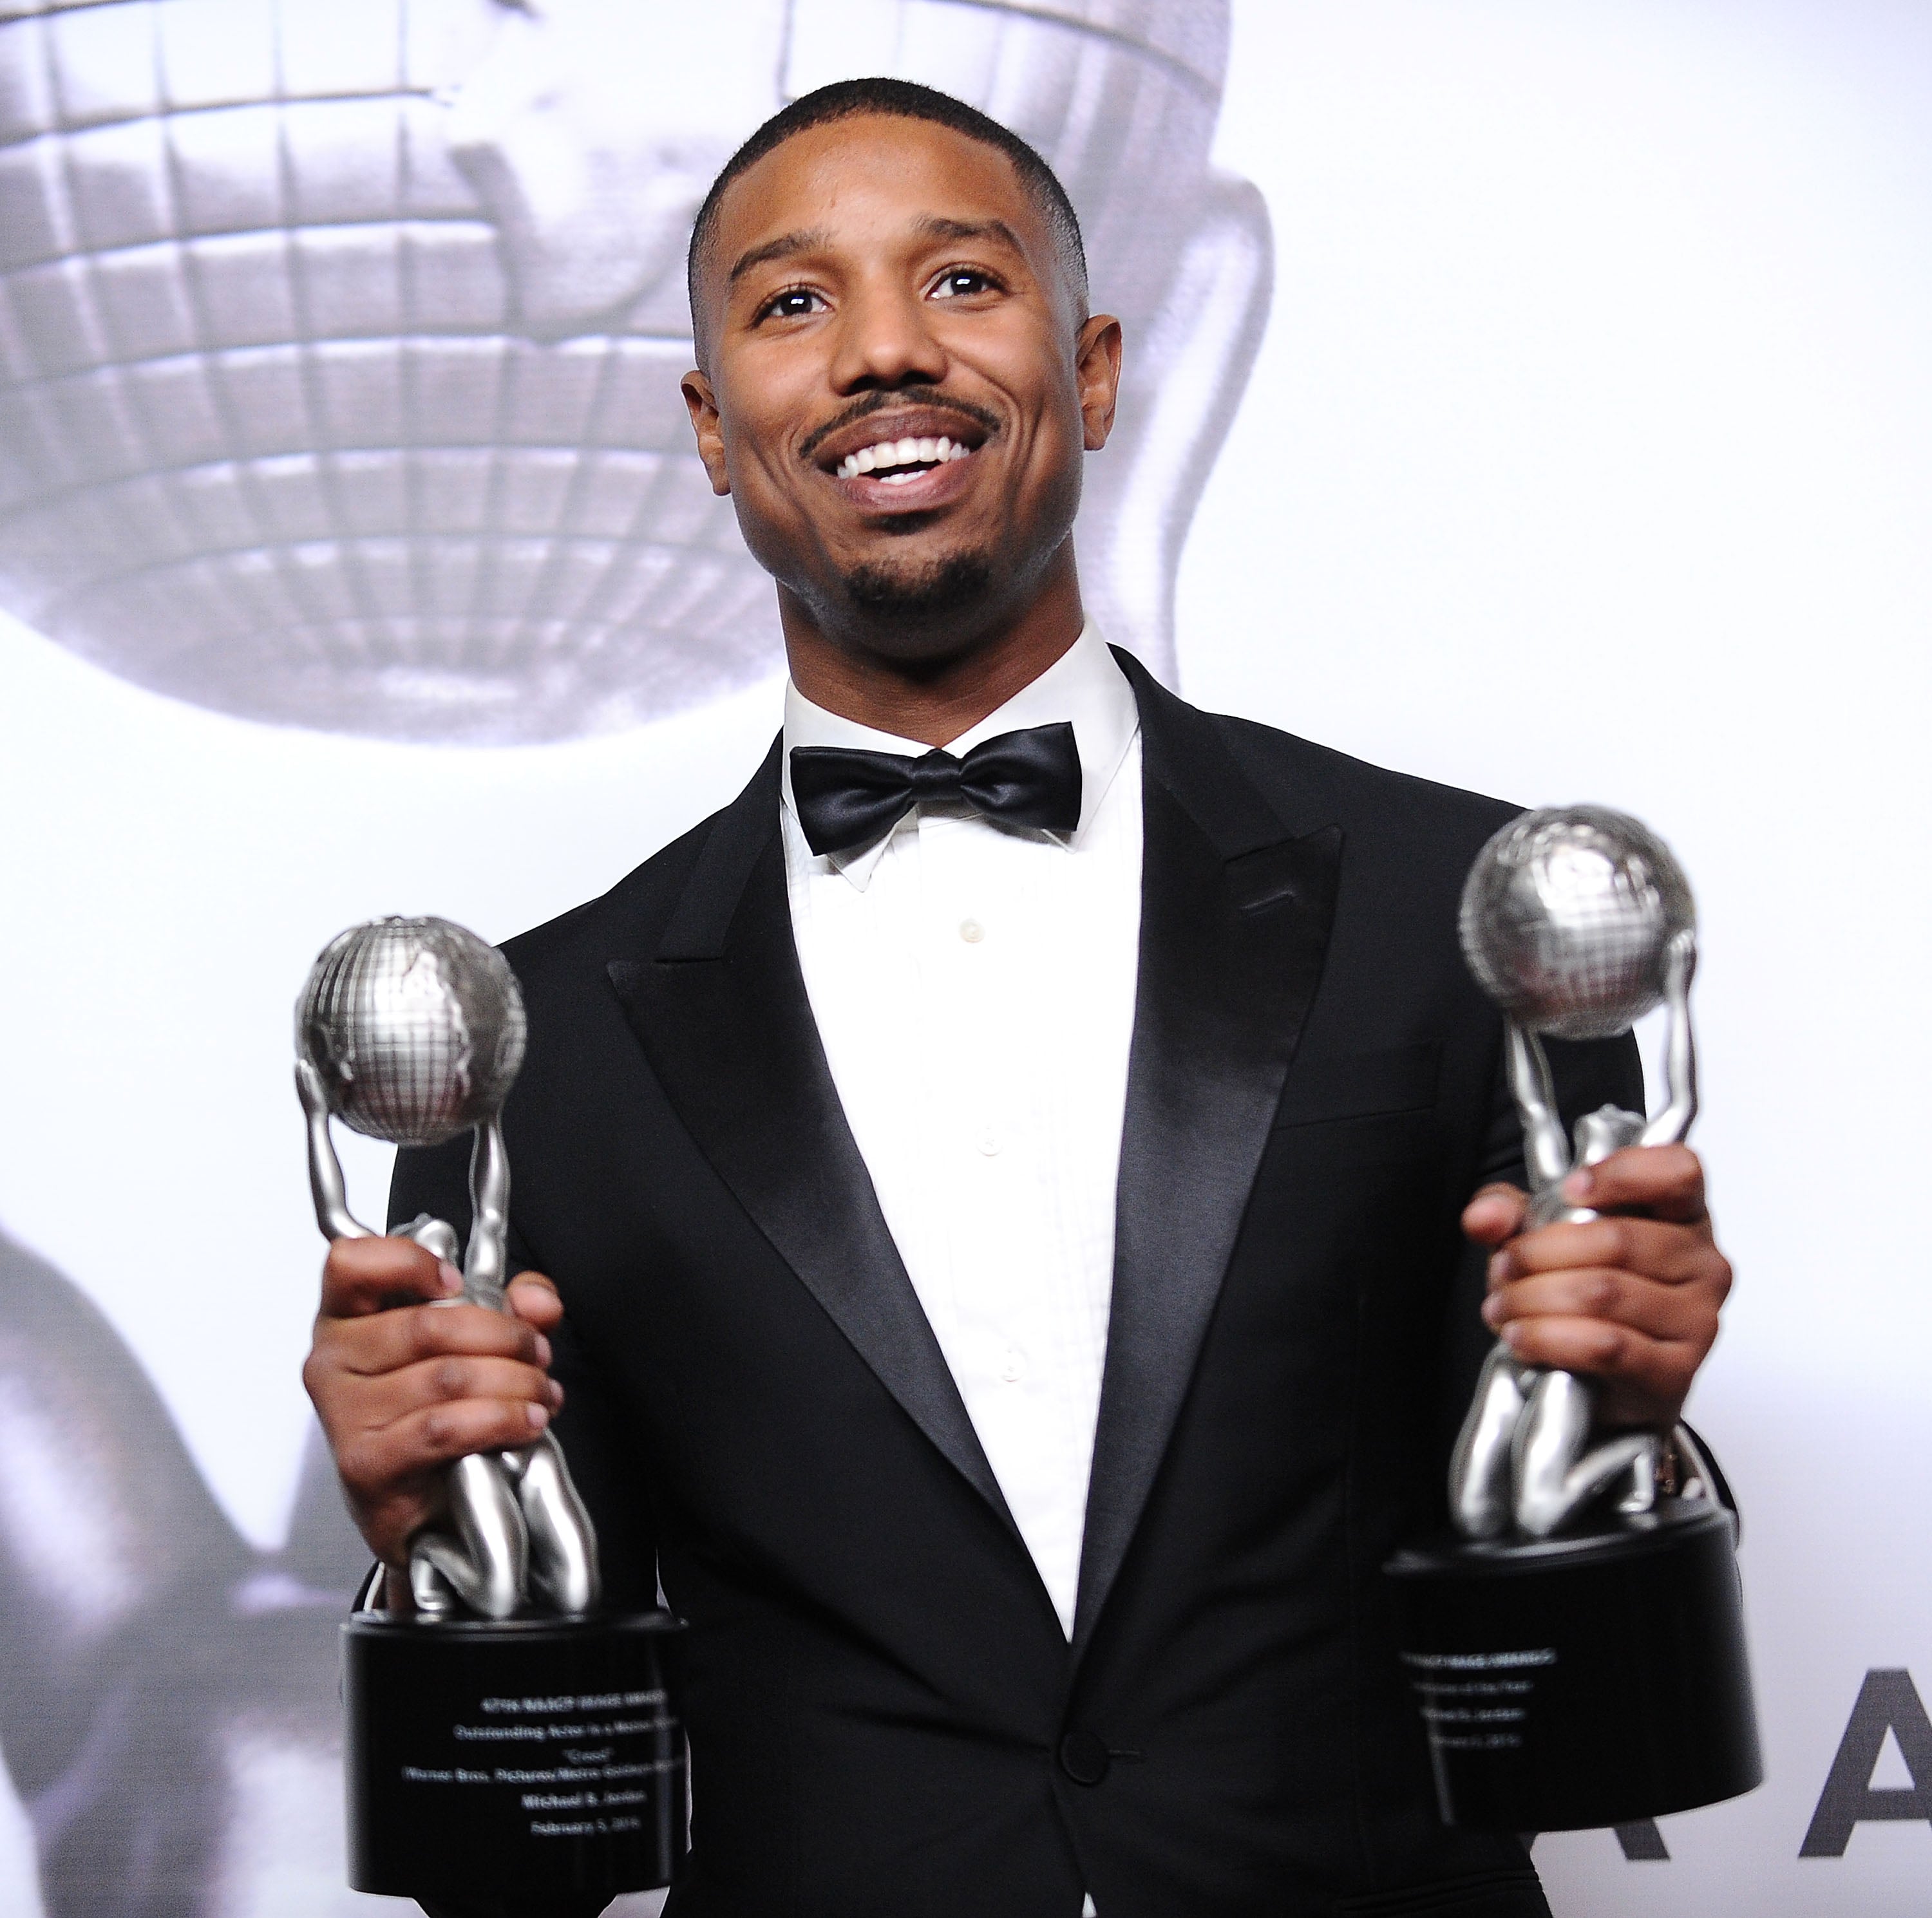 Michael B. Jordan Wins Big at NAACP Image Awards - WSJ